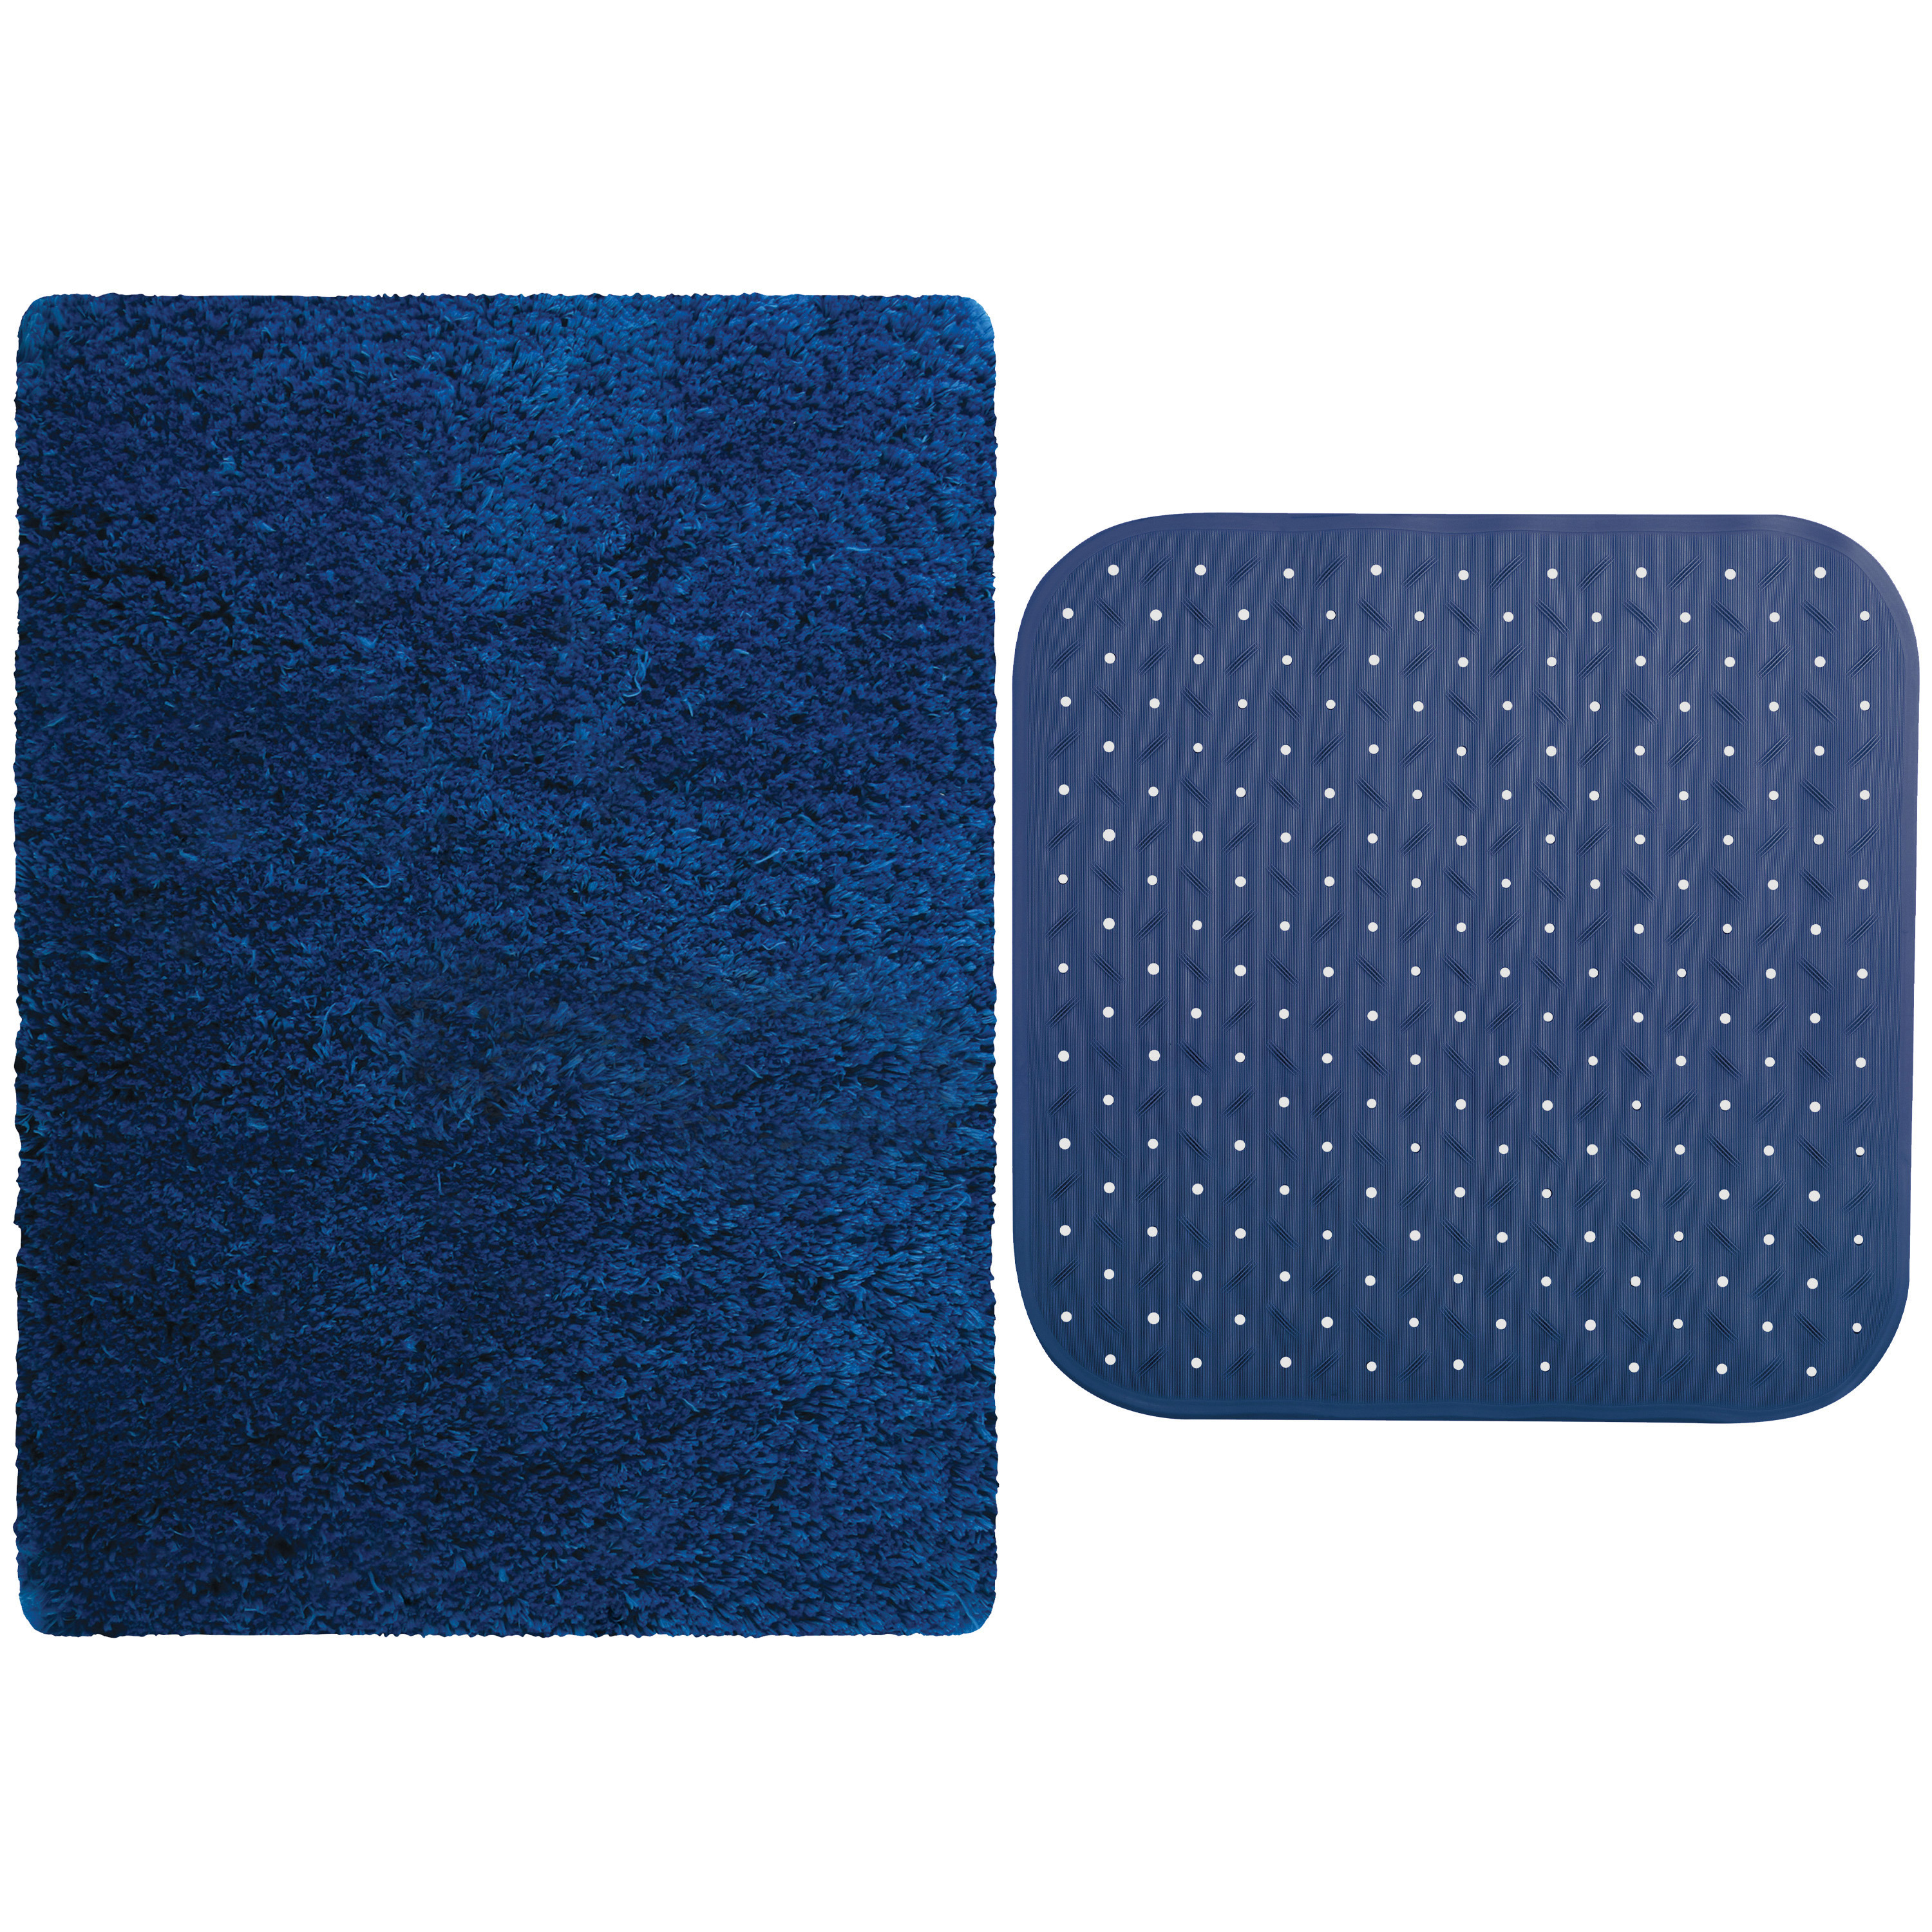 MSV Douche anti-slip mat en droogloop mat Venice badkamer set rubber-microvezel donkerblauw